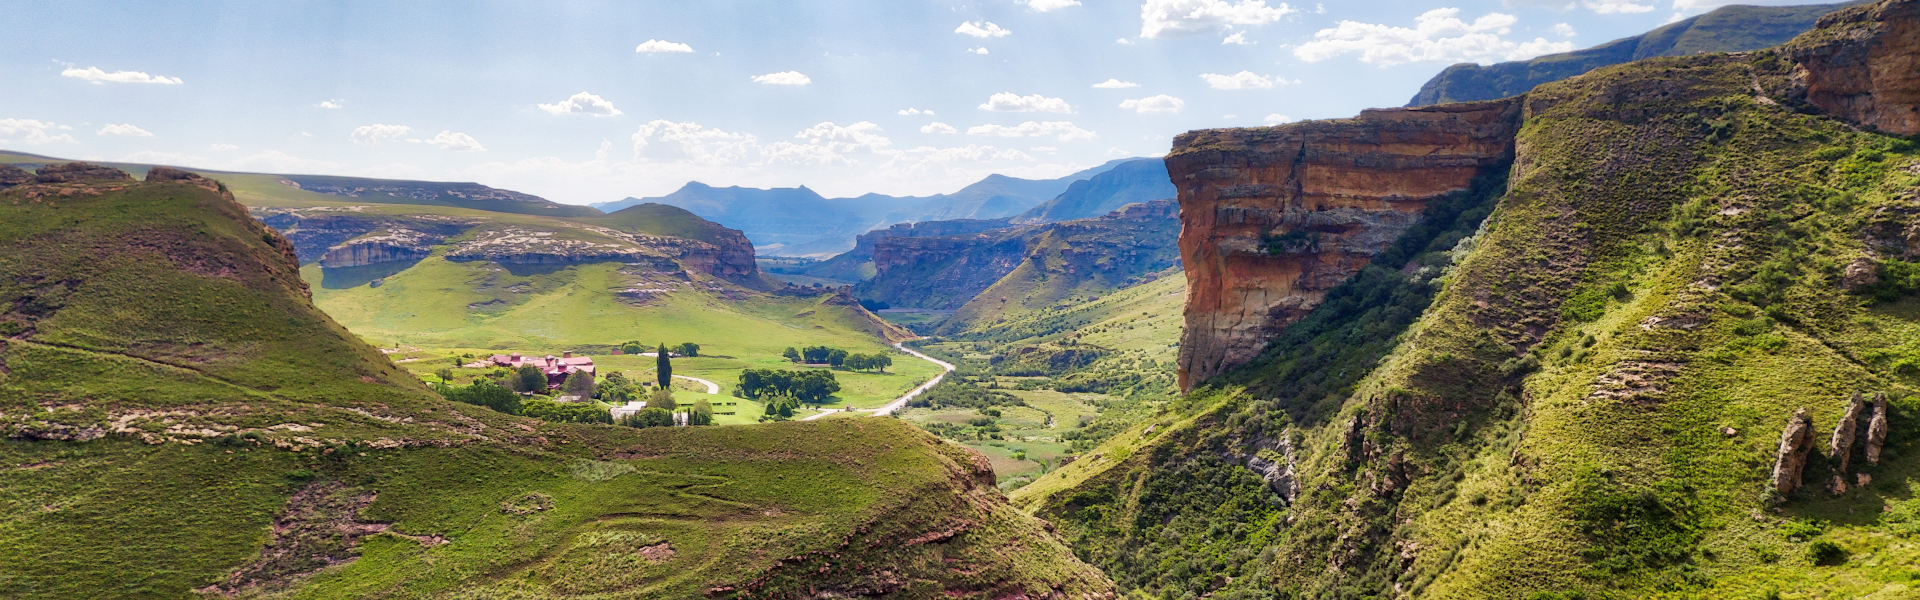 Südafrika & Swaziland - Abseits der Touristenpfade